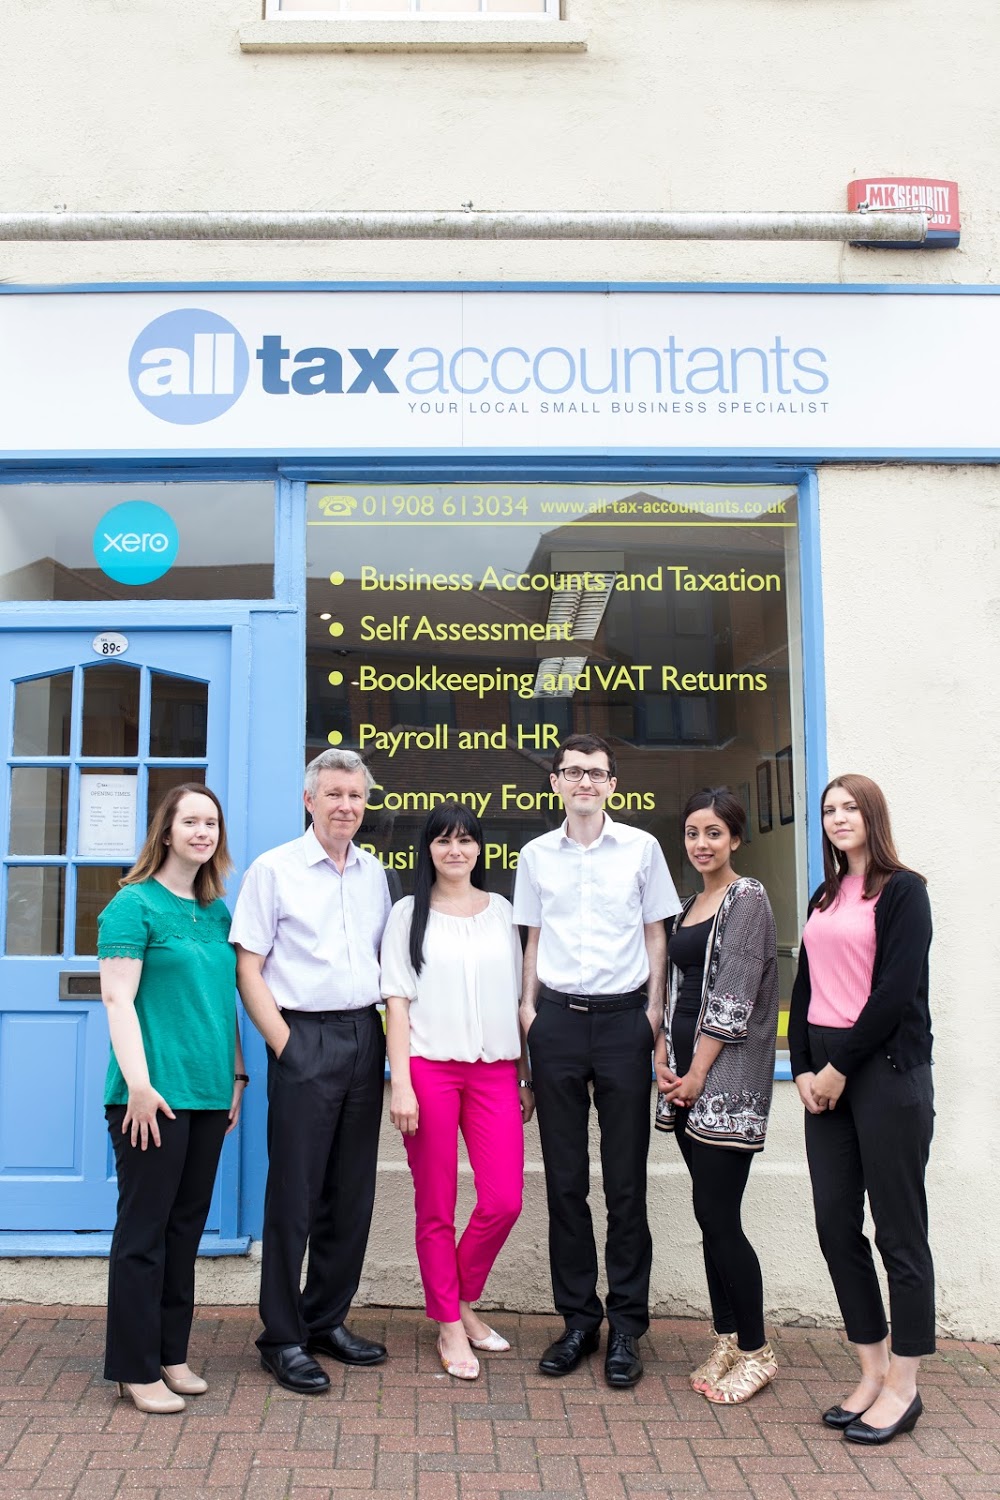 All Tax Accountants